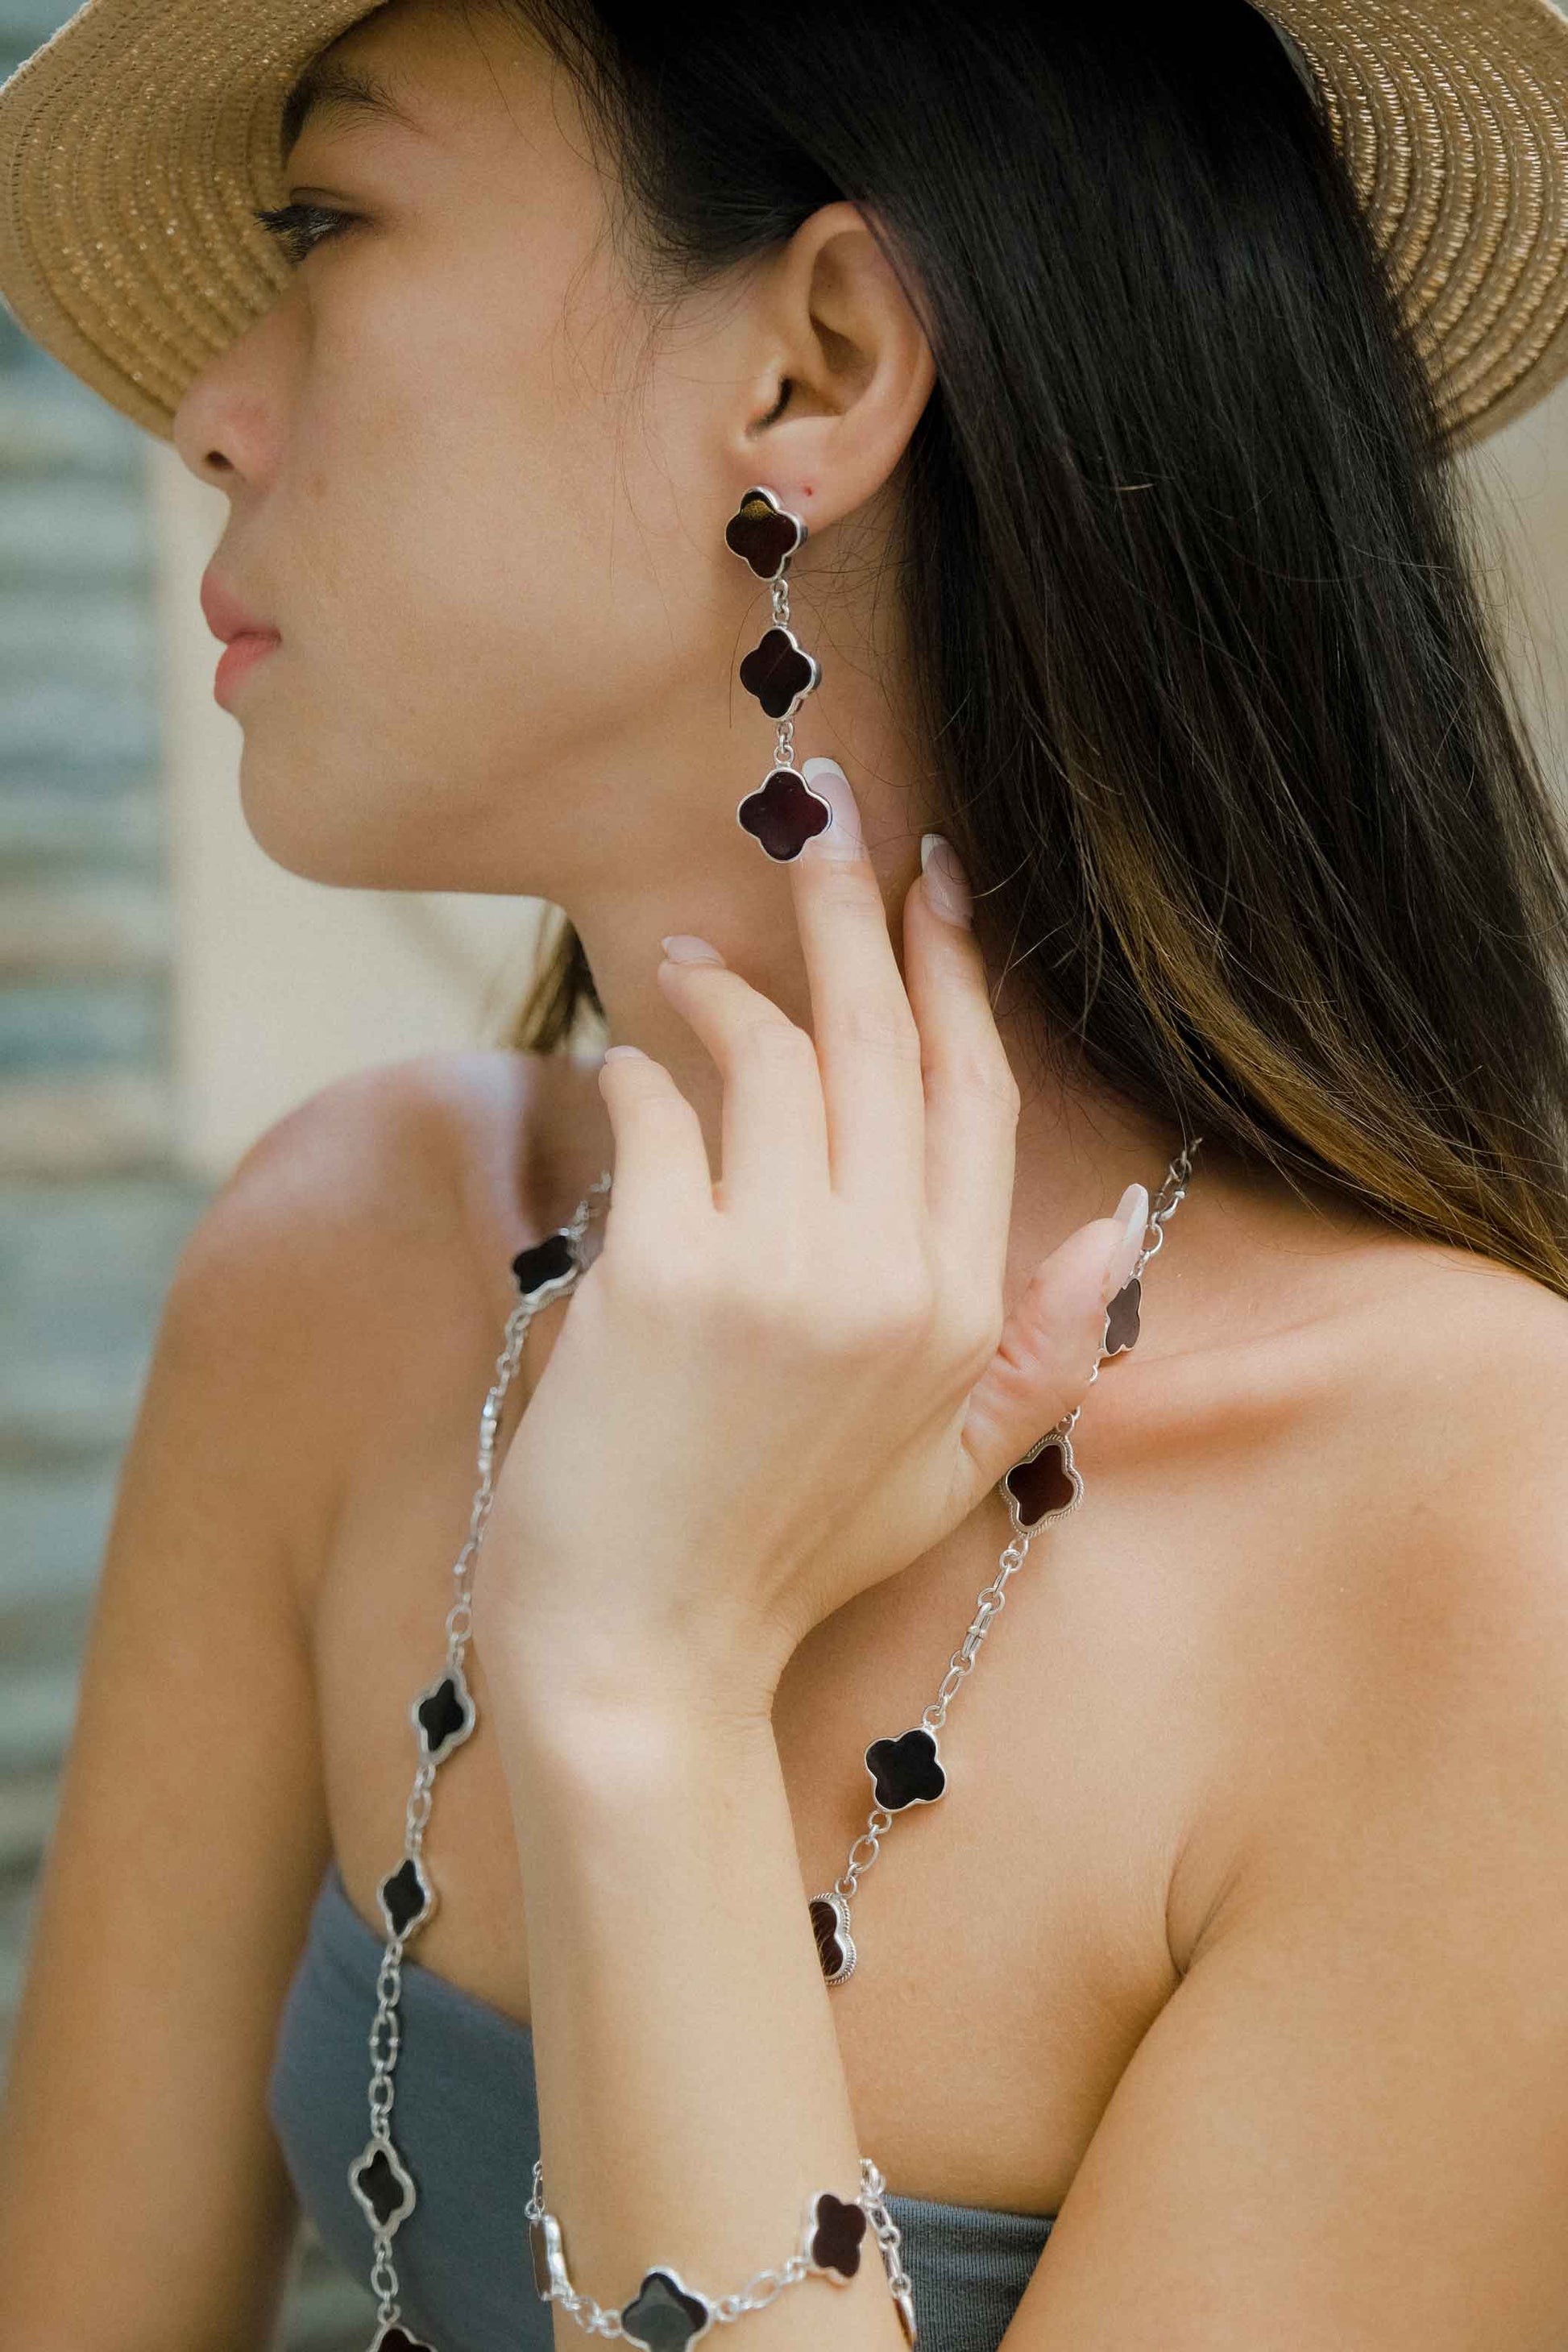 Black Clover Chandelier Earrings - Reva Jewellery